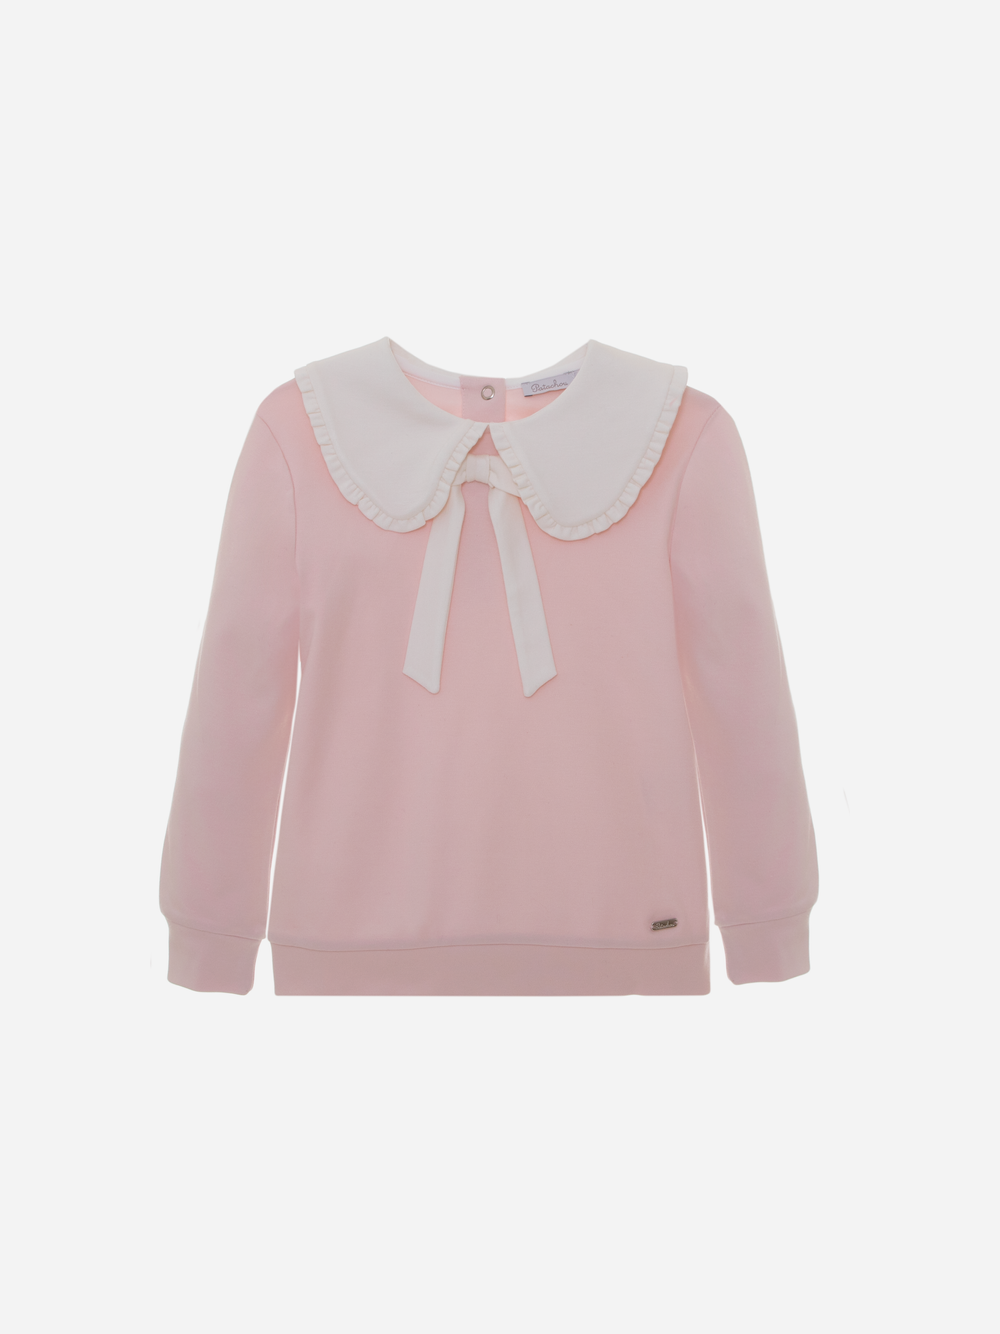 Pale pink interlock sweater